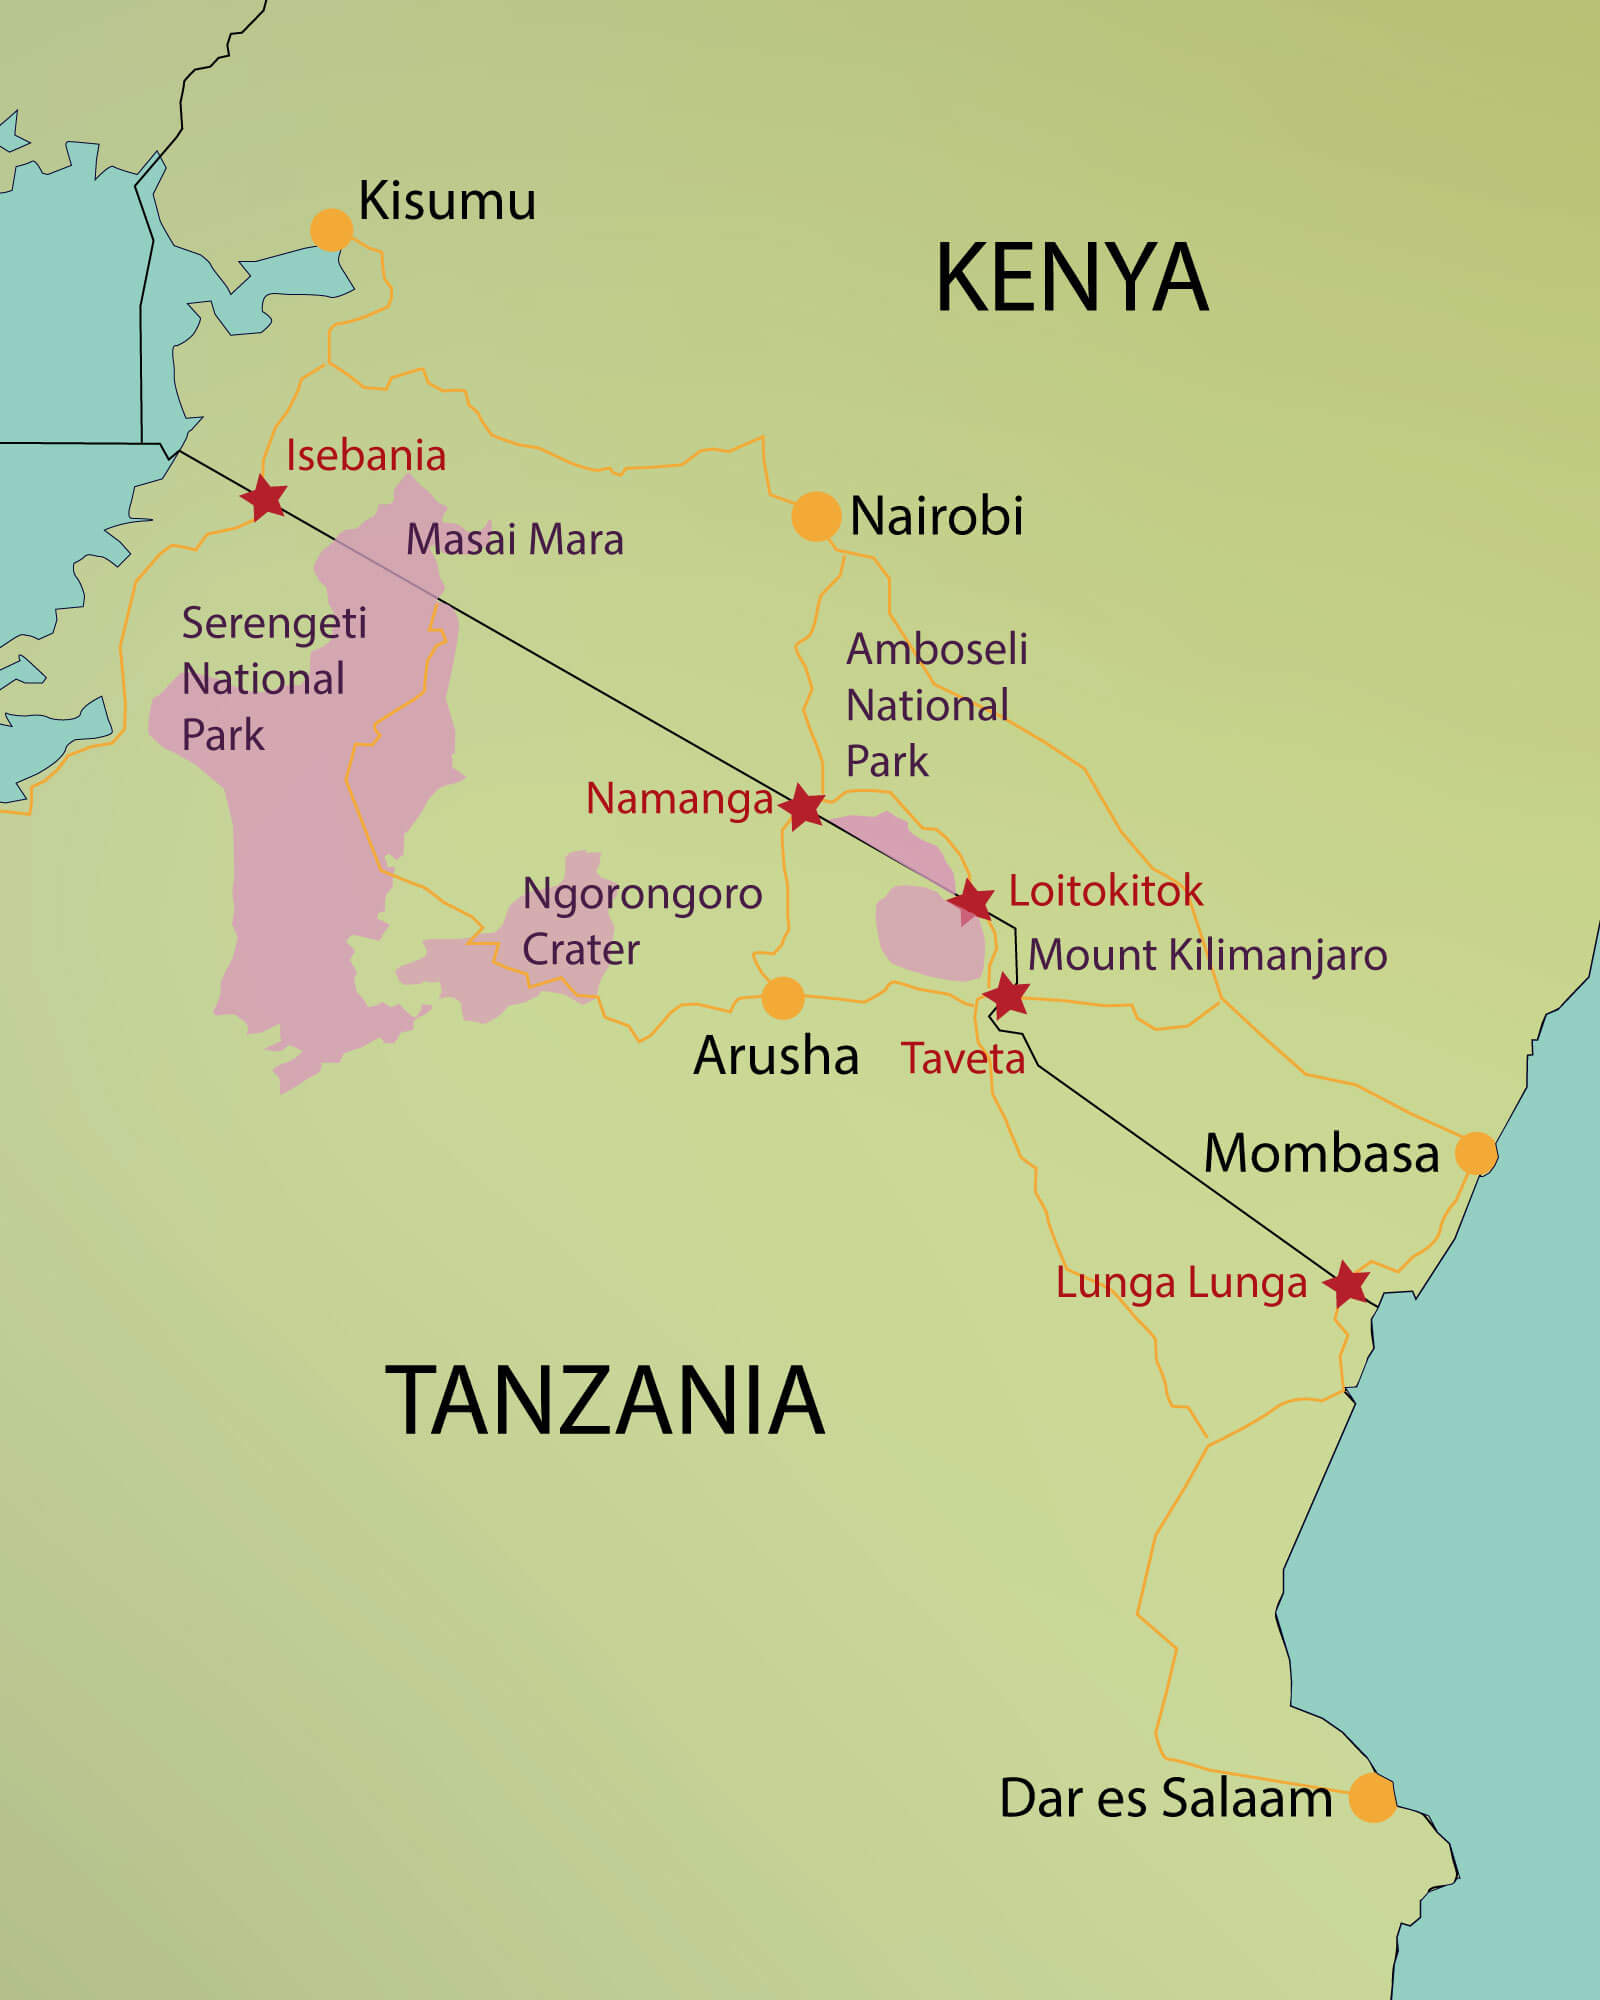 travel documents from kenya to tanzania